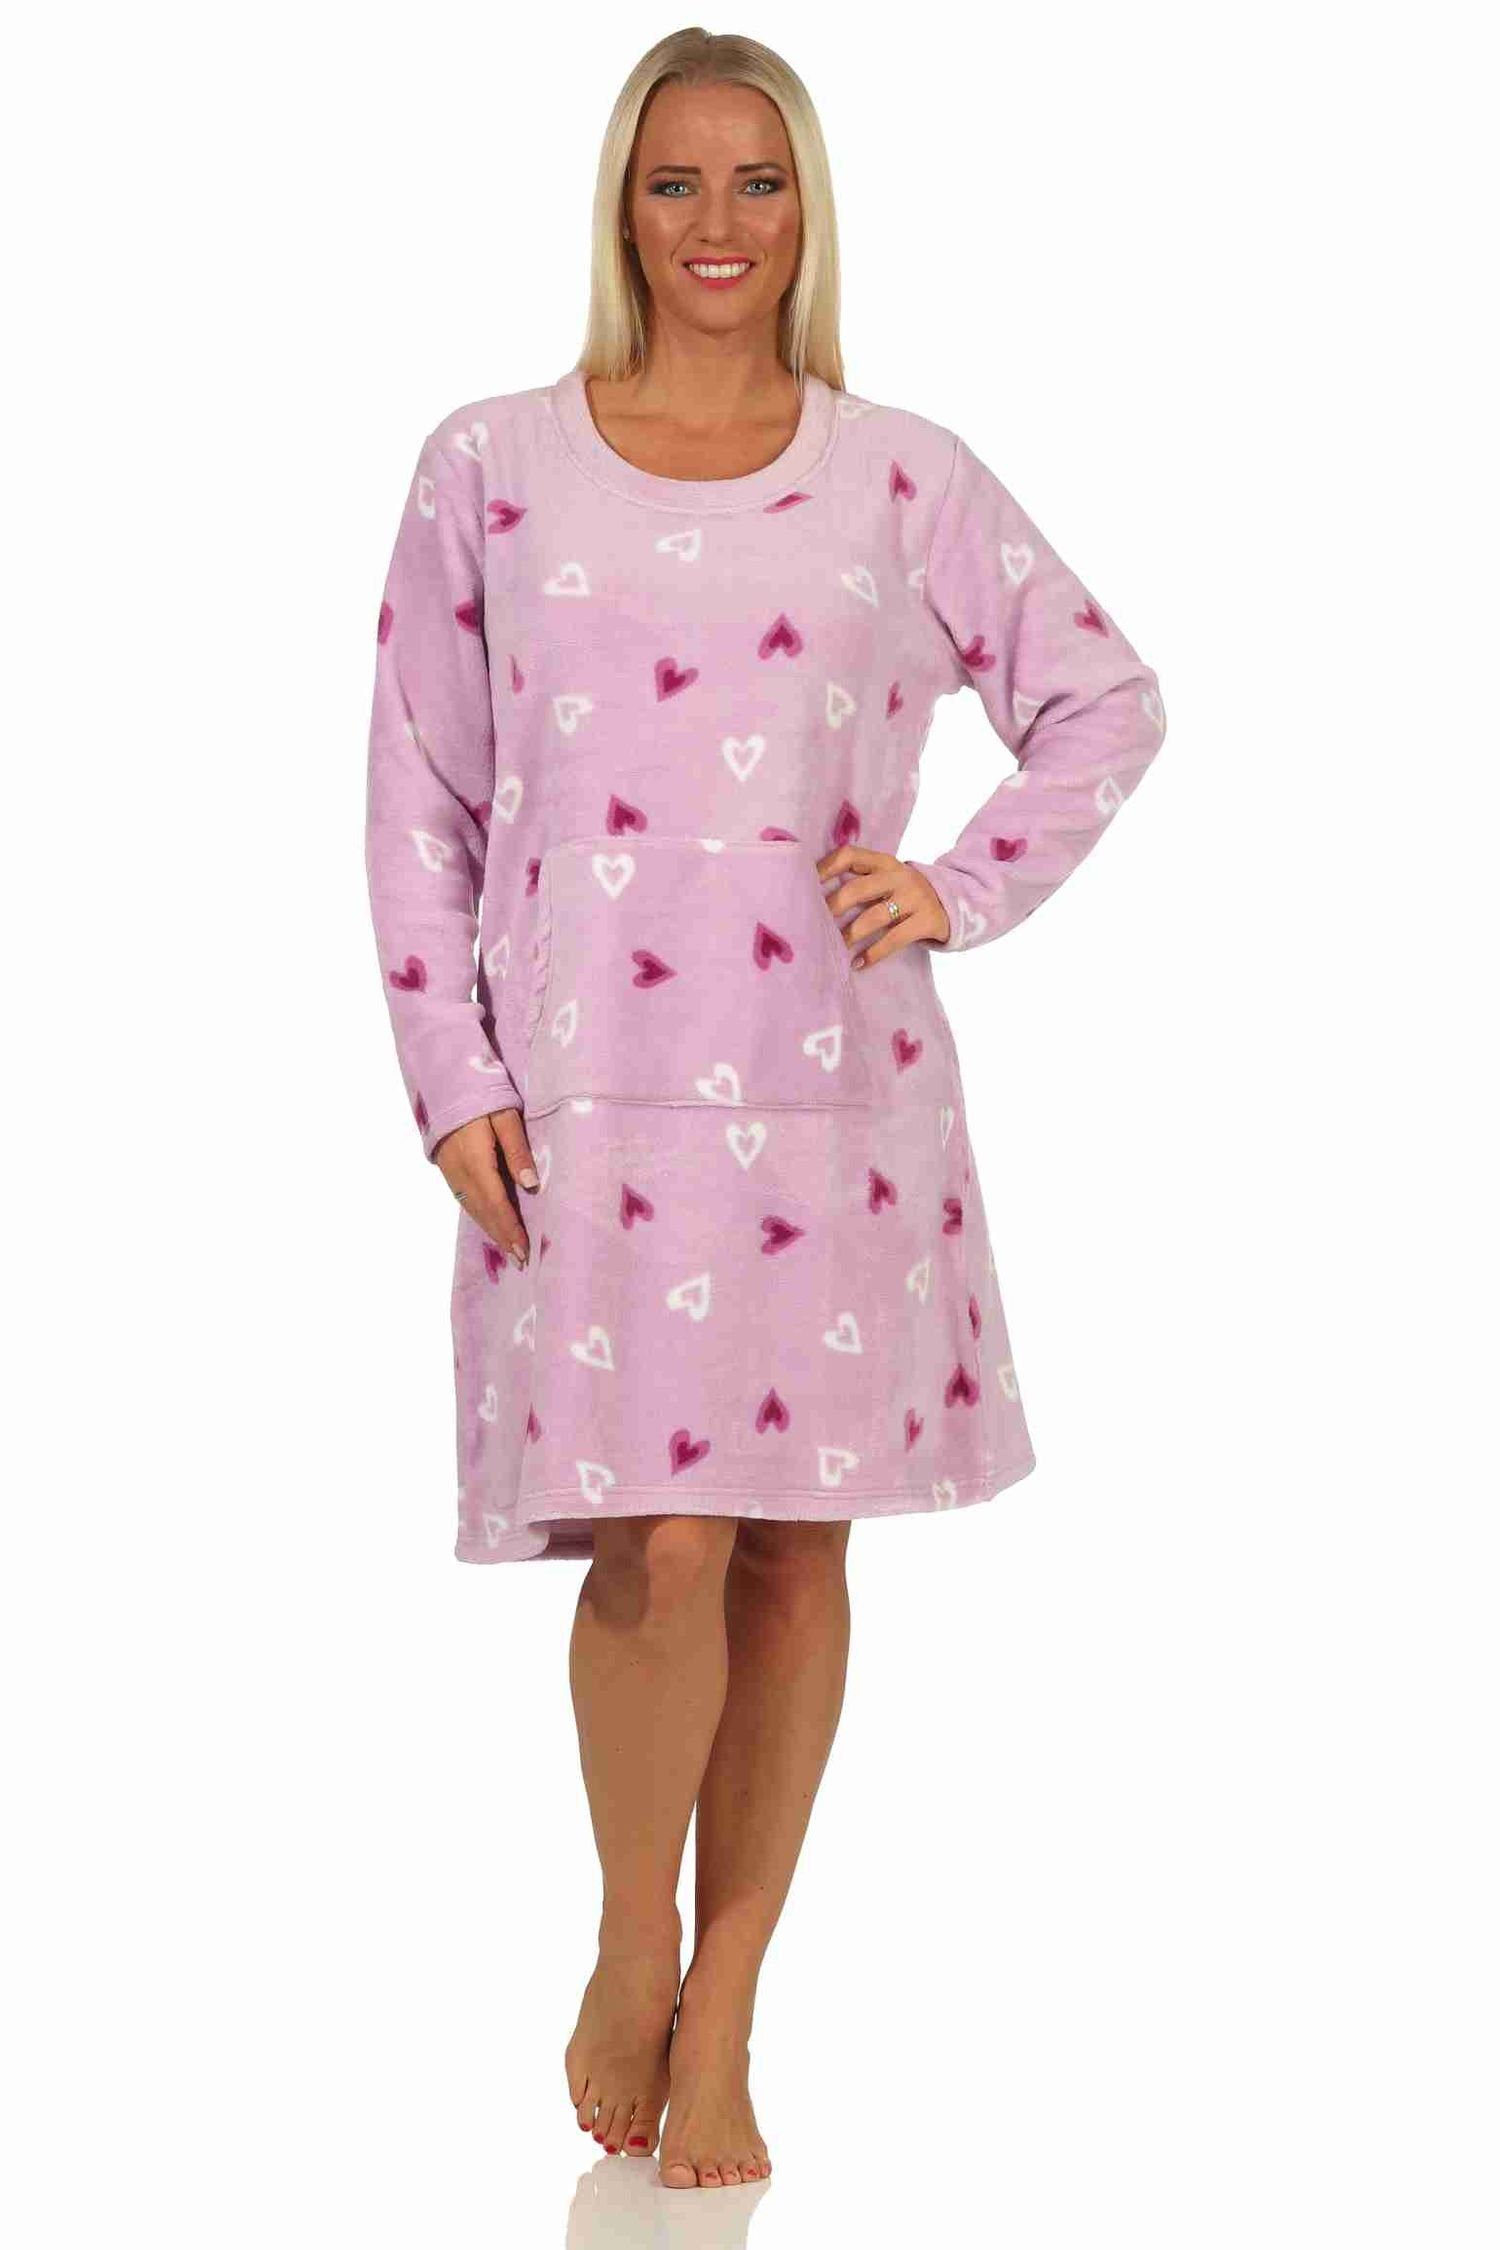 Normann Nachthemd Damen Nachthemd Hauskleid aus softem Coralfleece in  Herz-Motiv Optik